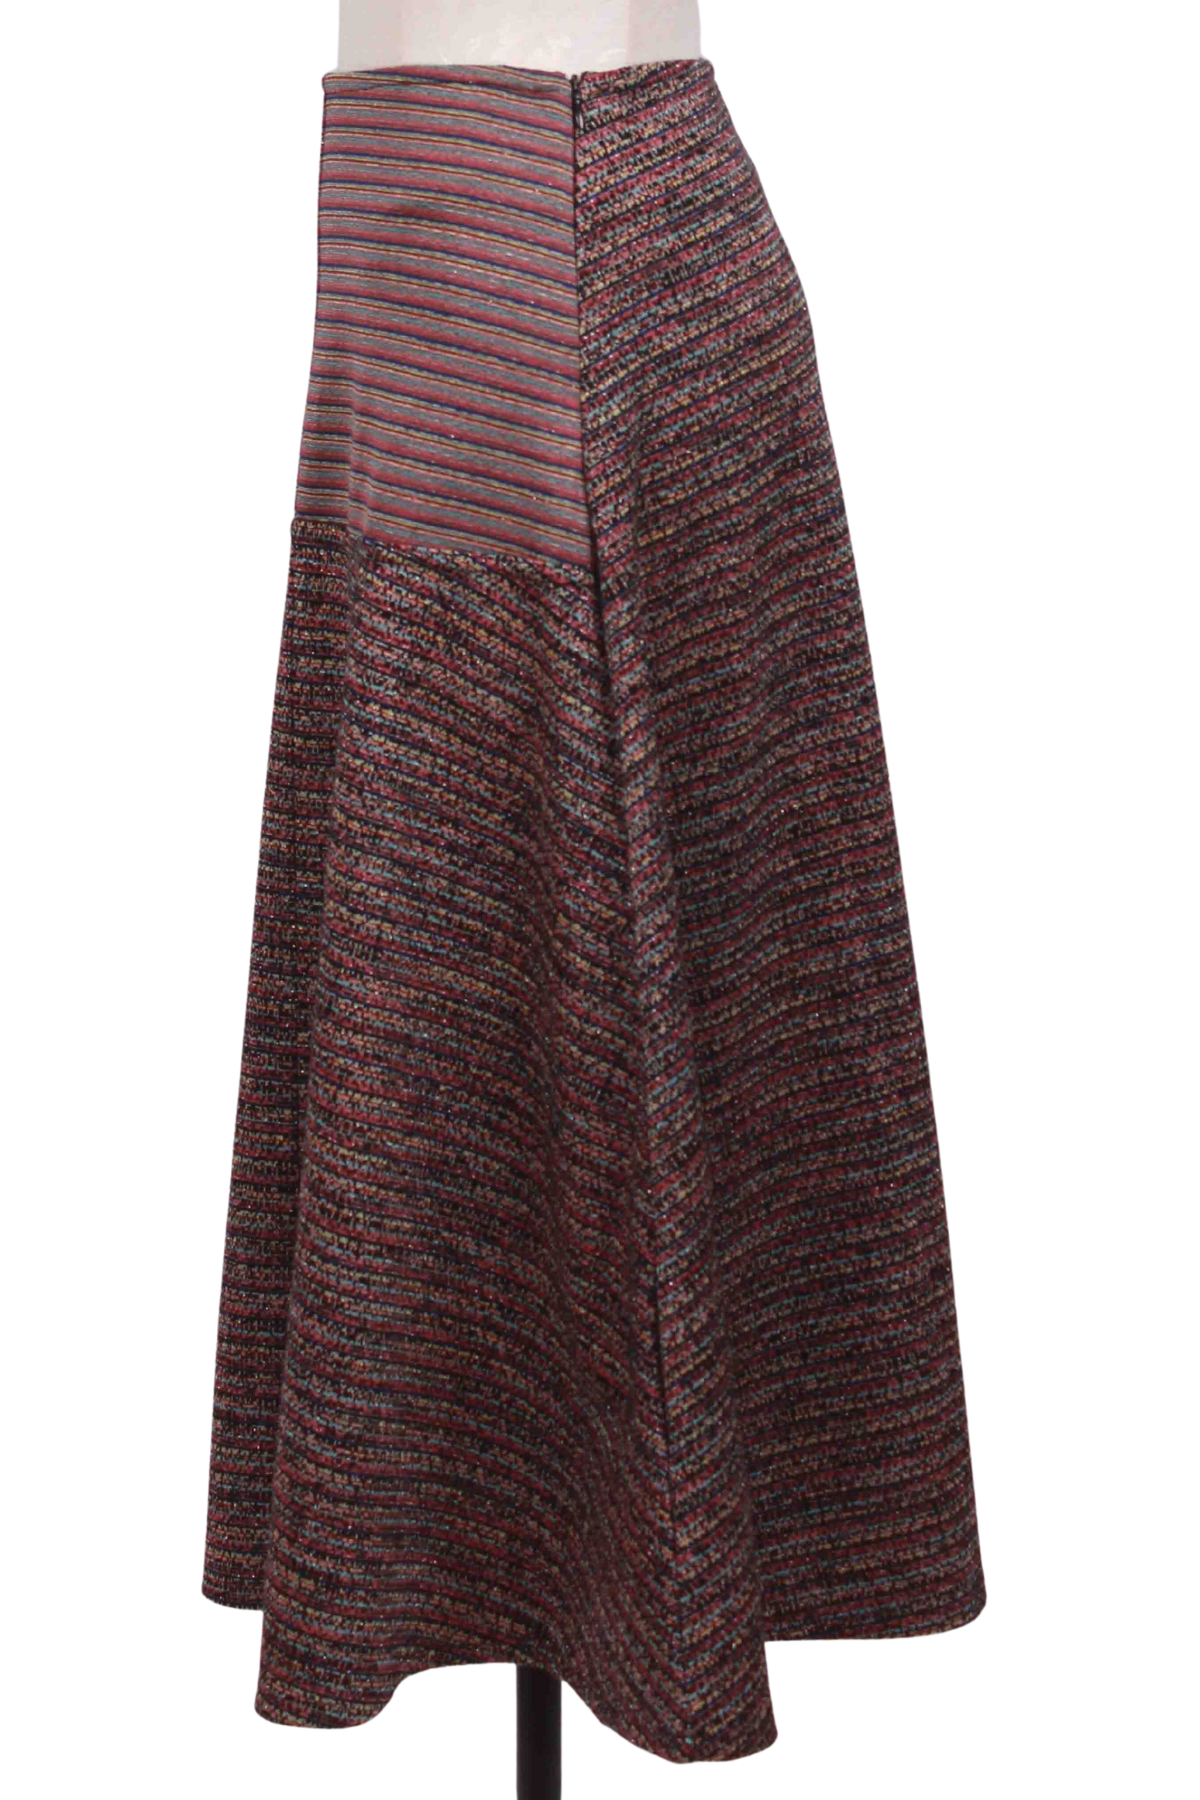 side view of Prado stripe fabric Godet Skirt by Isle by Melis Kozan